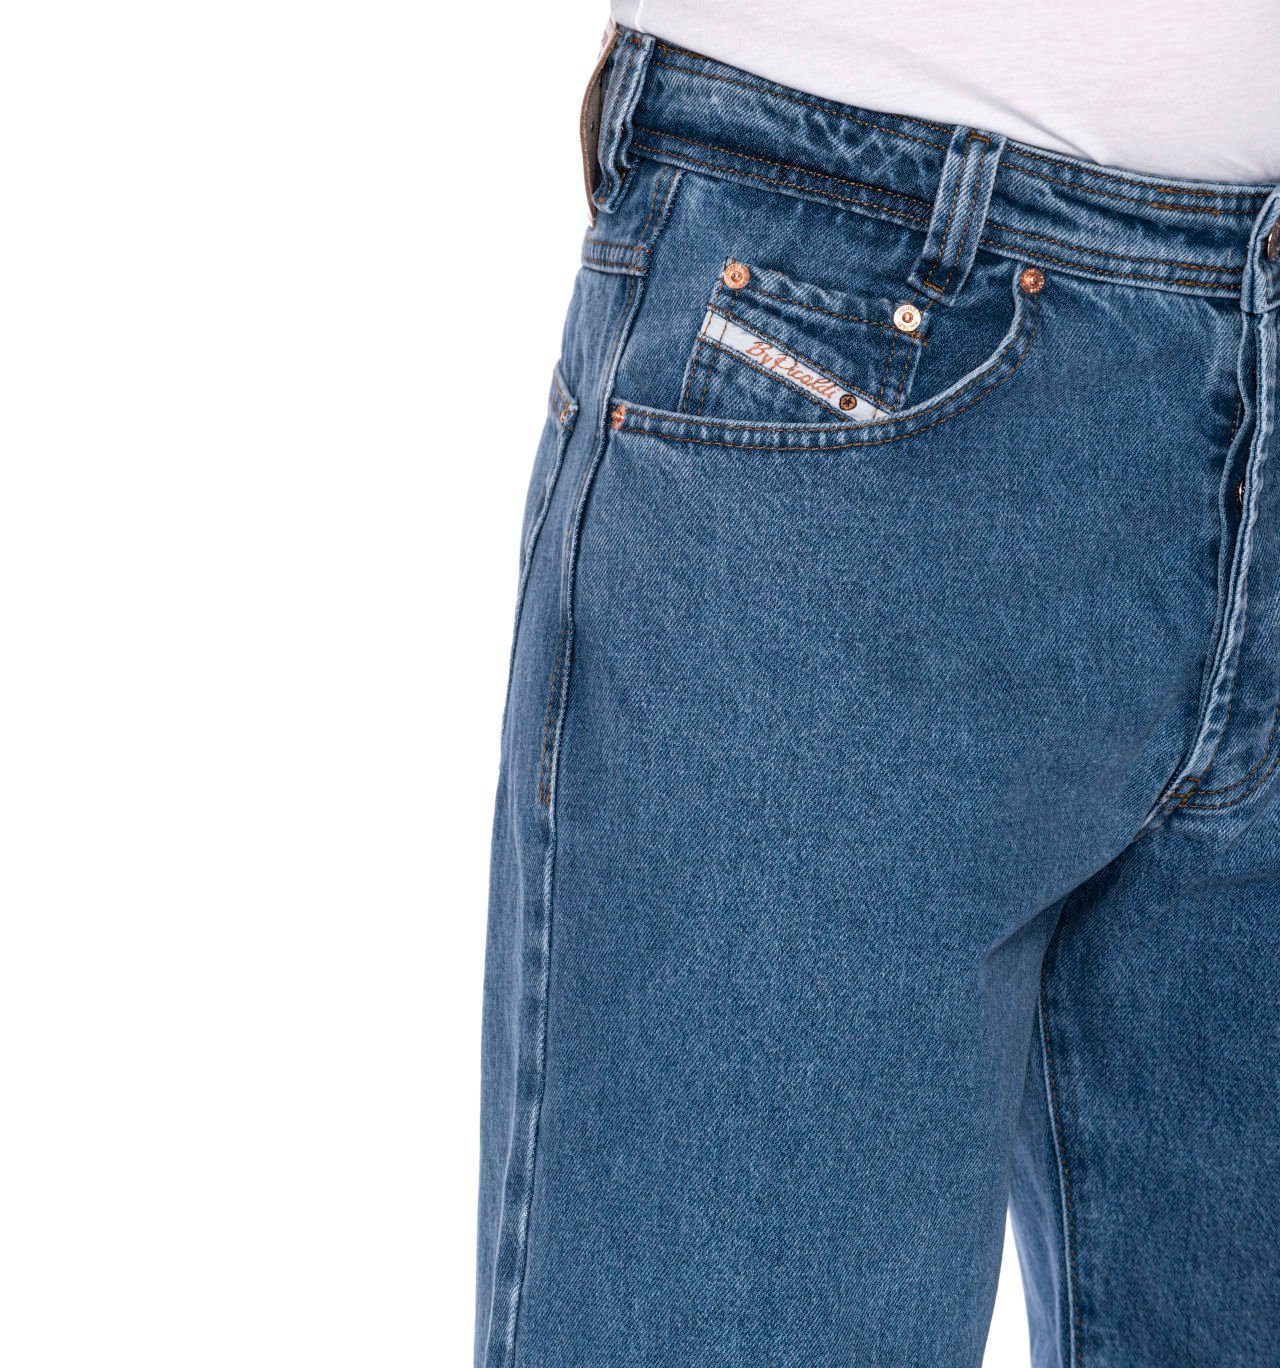 PICALDI Jeans Weite Jeans Fit, Zicco Five Jeans Detroit Loose 471 Pocket